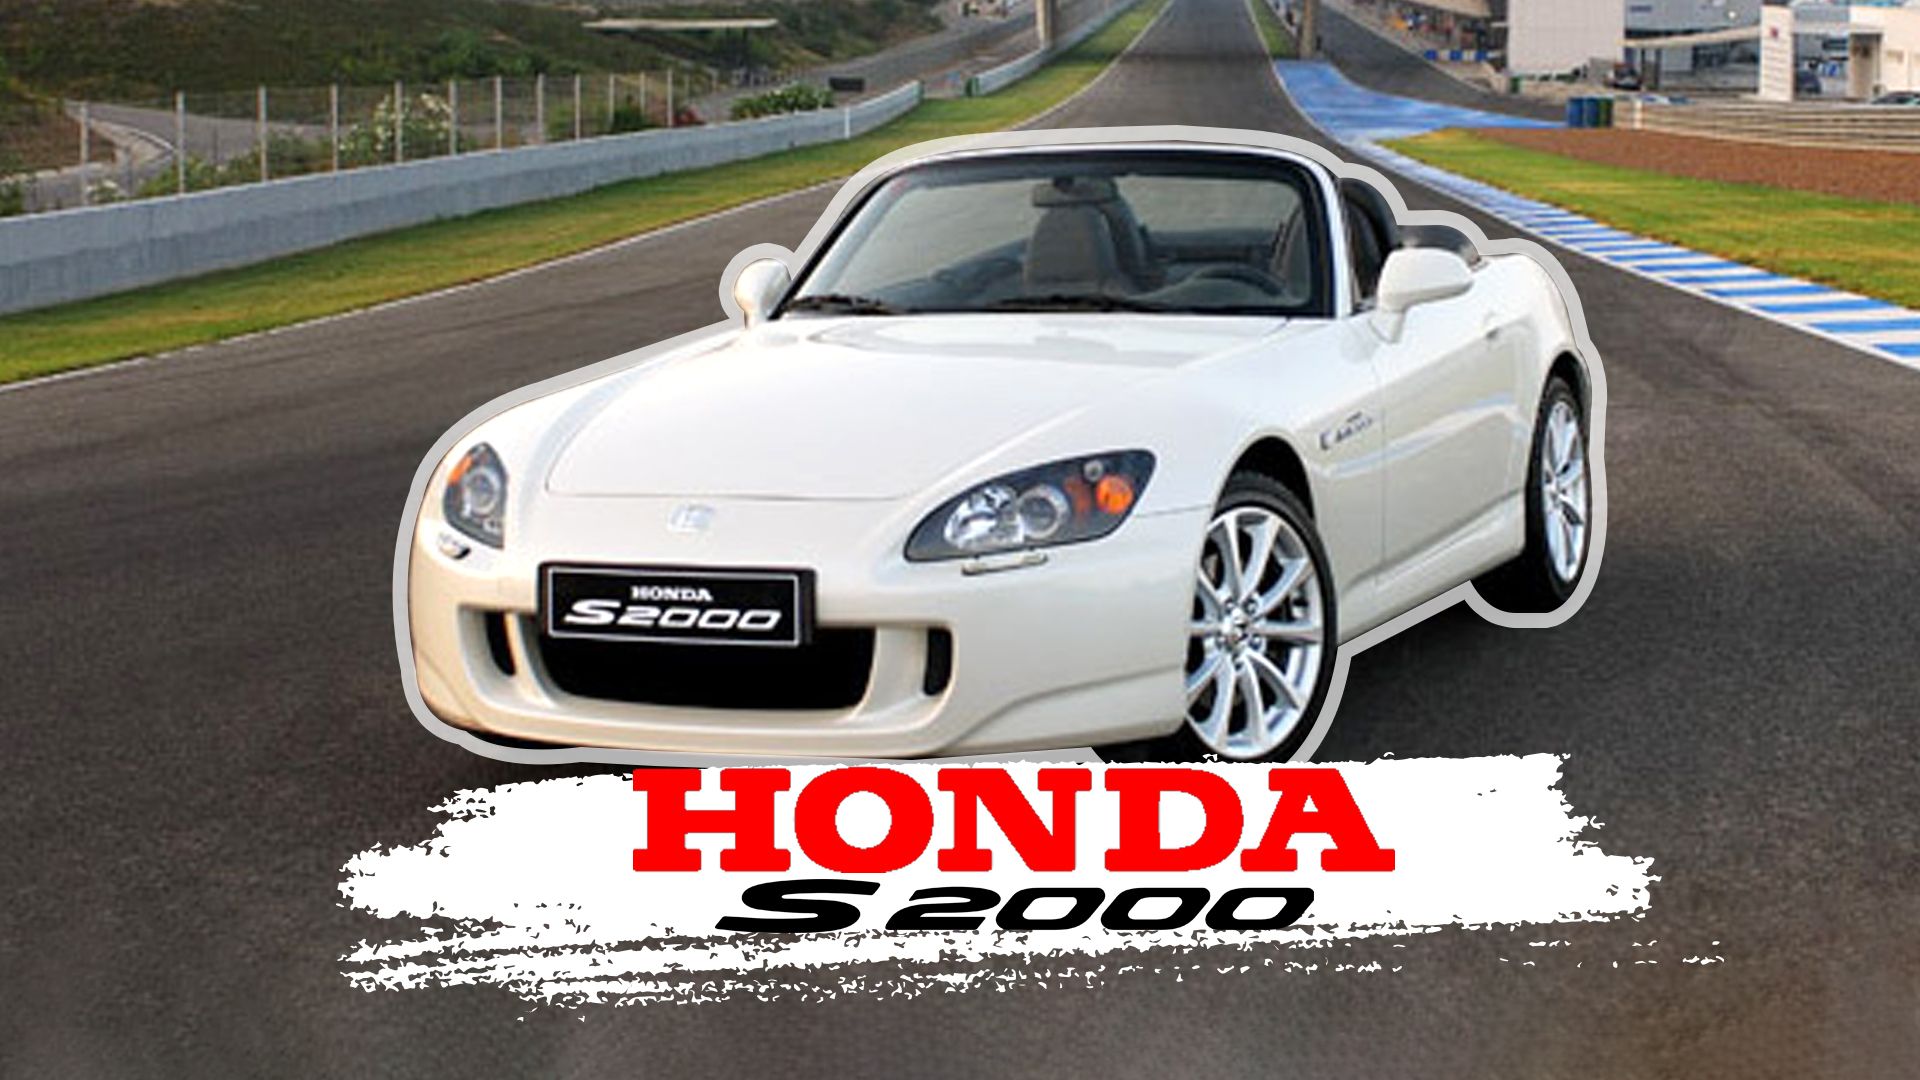 2006 Honda S2000 Convertible: Latest Prices, Reviews, Specs